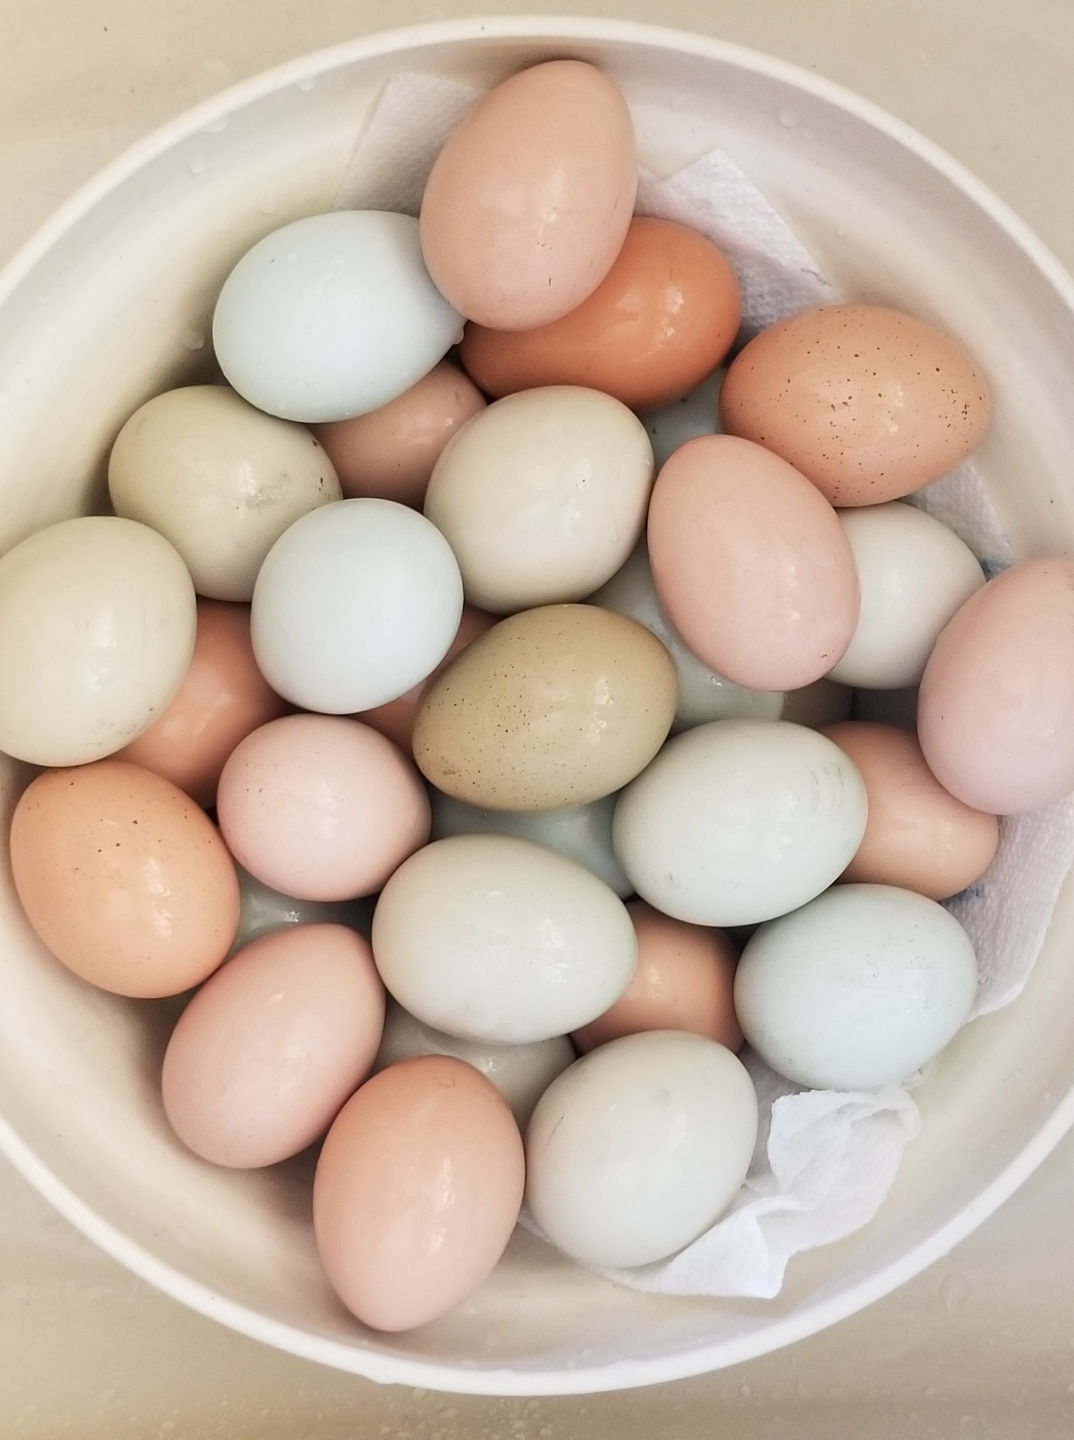 How To Identify Fresh Laid Eggs